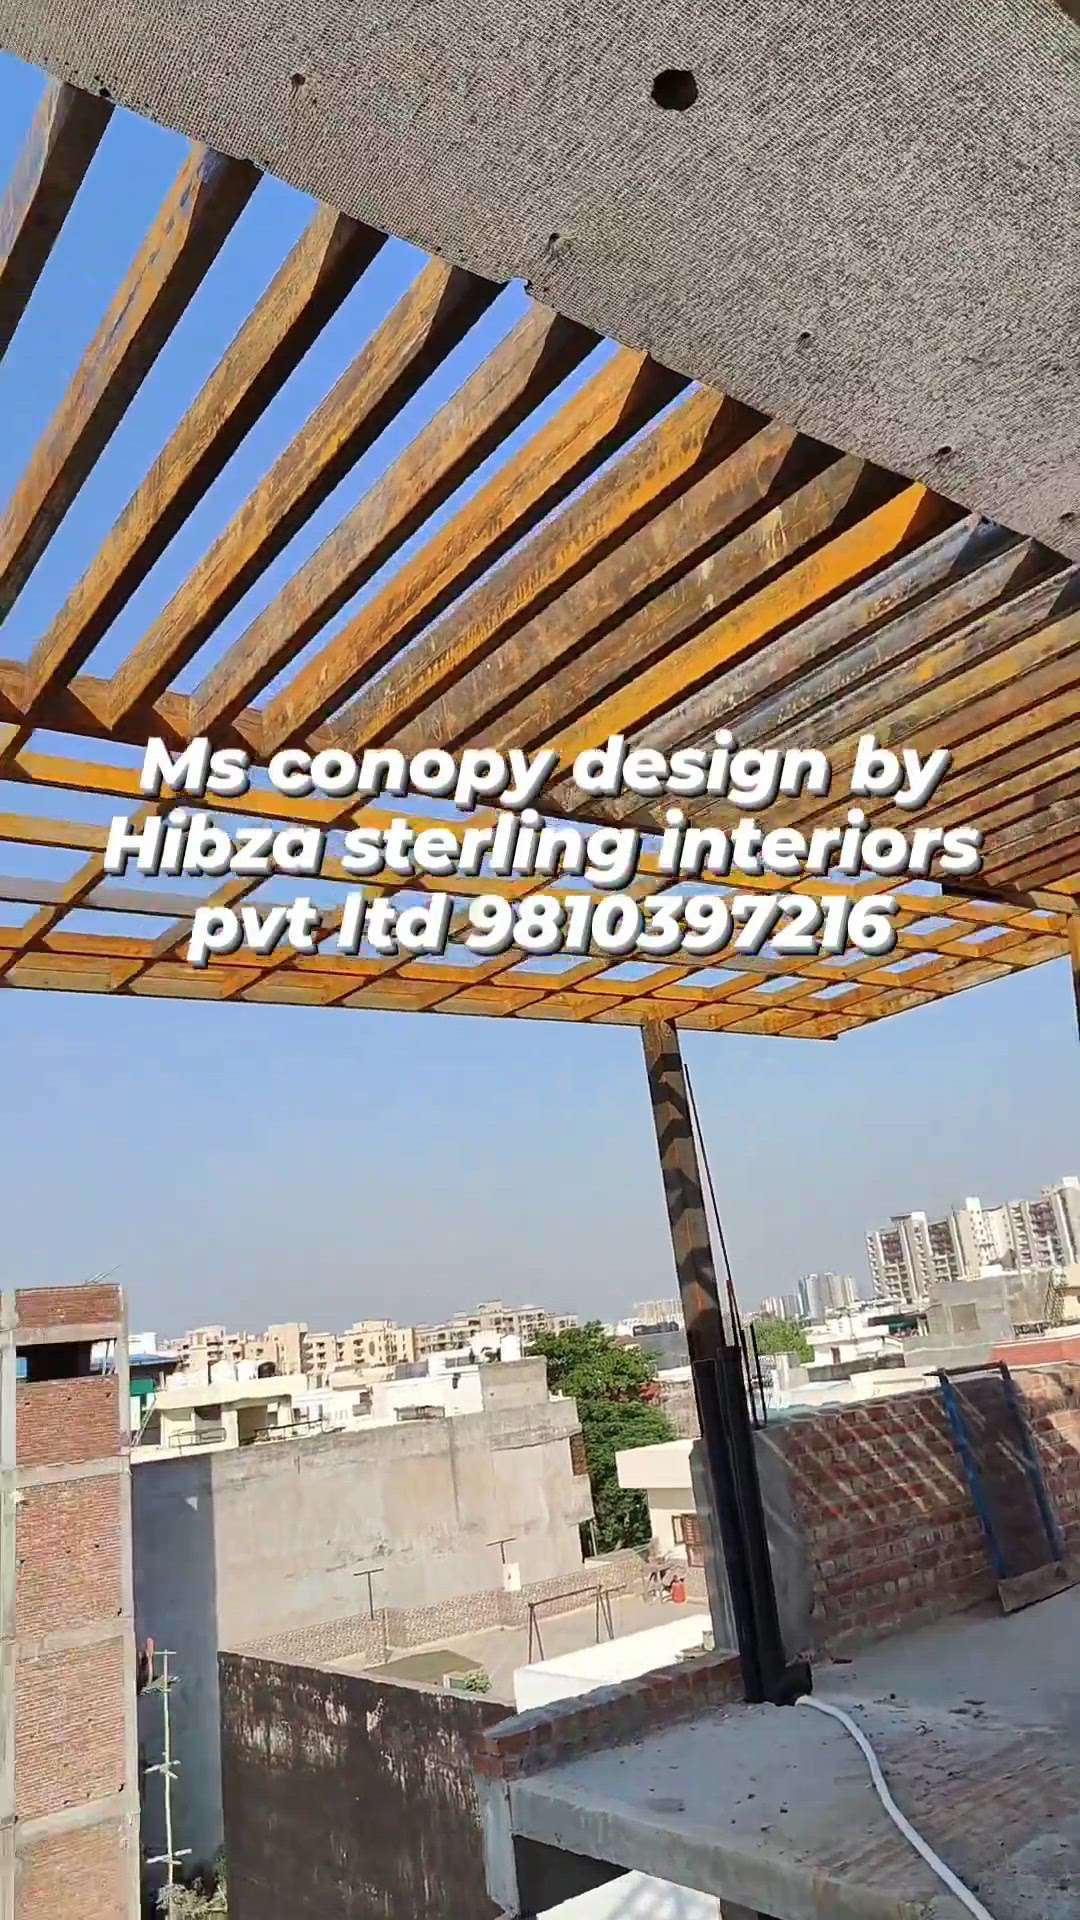 Ms conopy design by Hibza sterling interiors pvt ltd
#mscanopy #canopydesign #canopy #PergolaDesigns